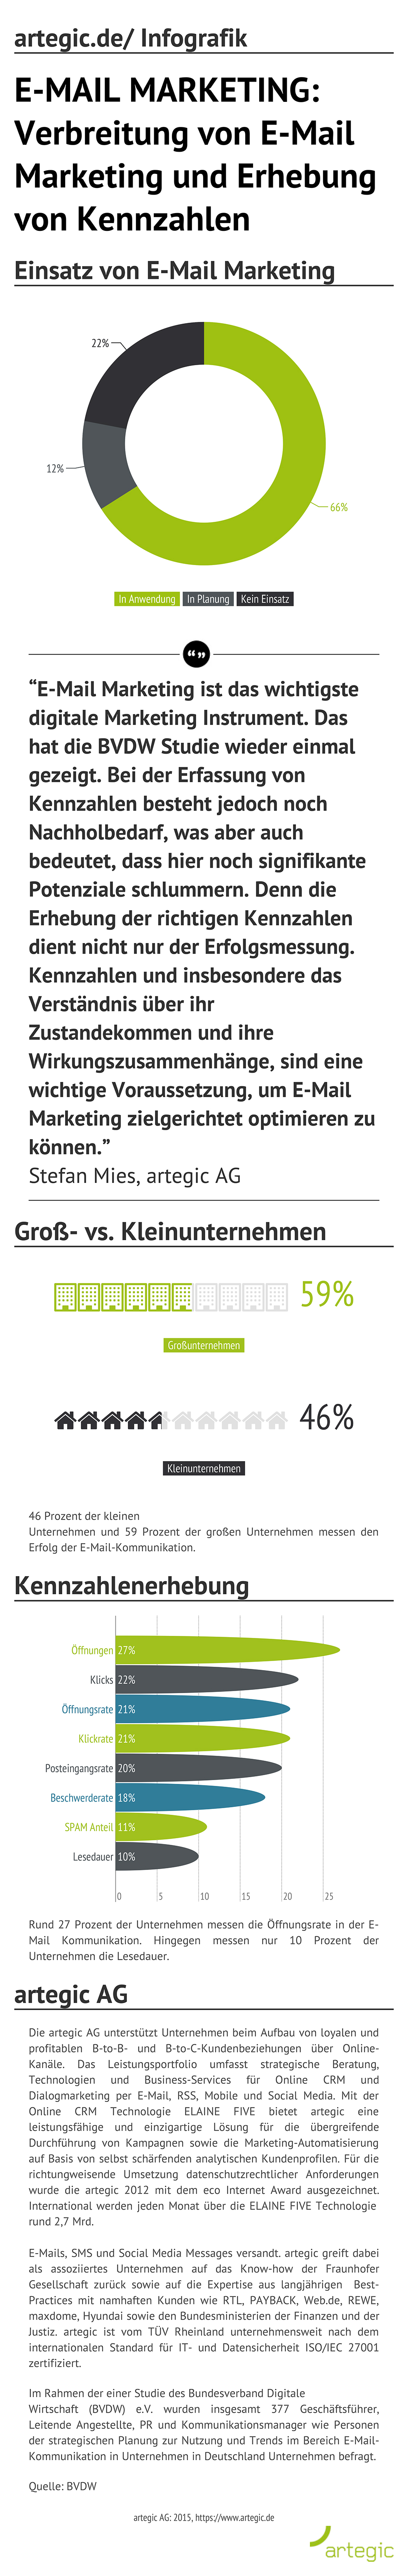 artegic_de,-Infografik_-email-marketing